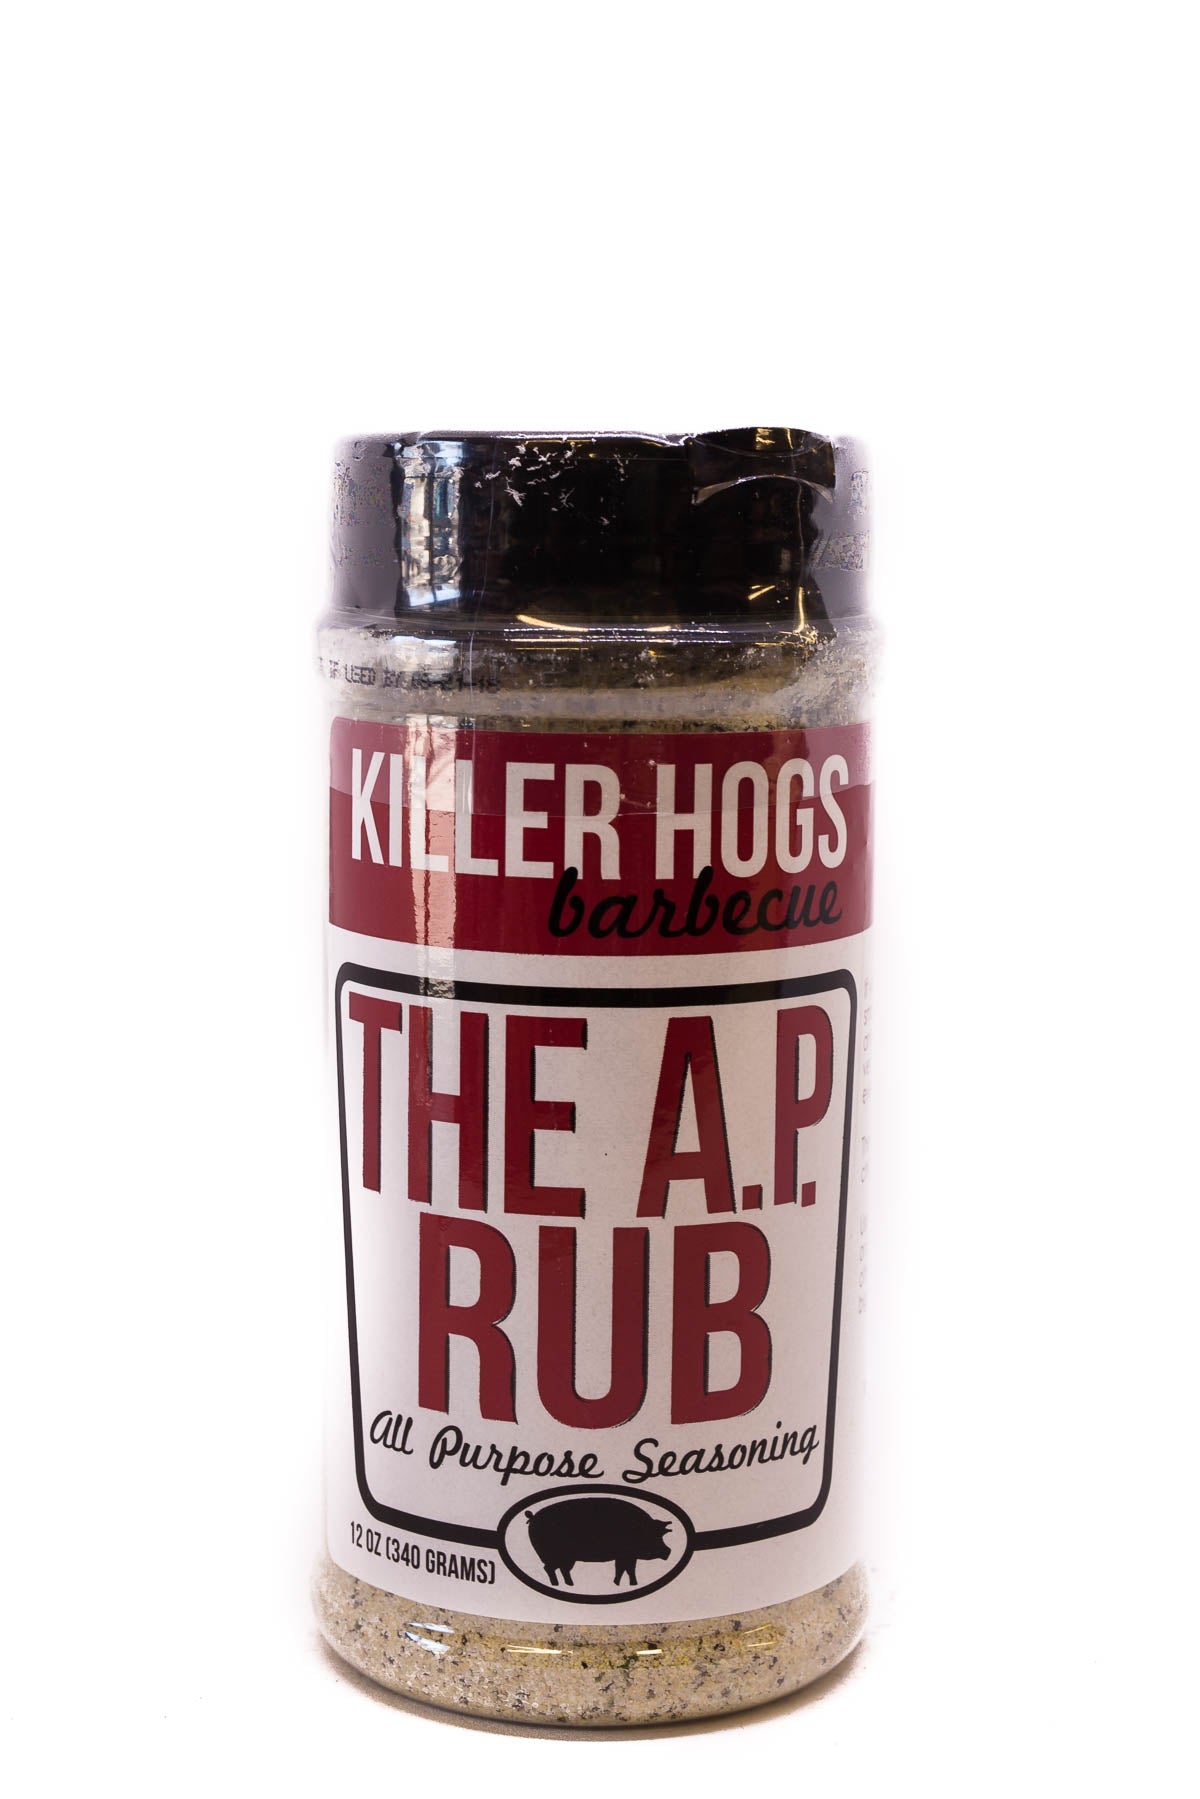 Killer Hogs The Ap Rub